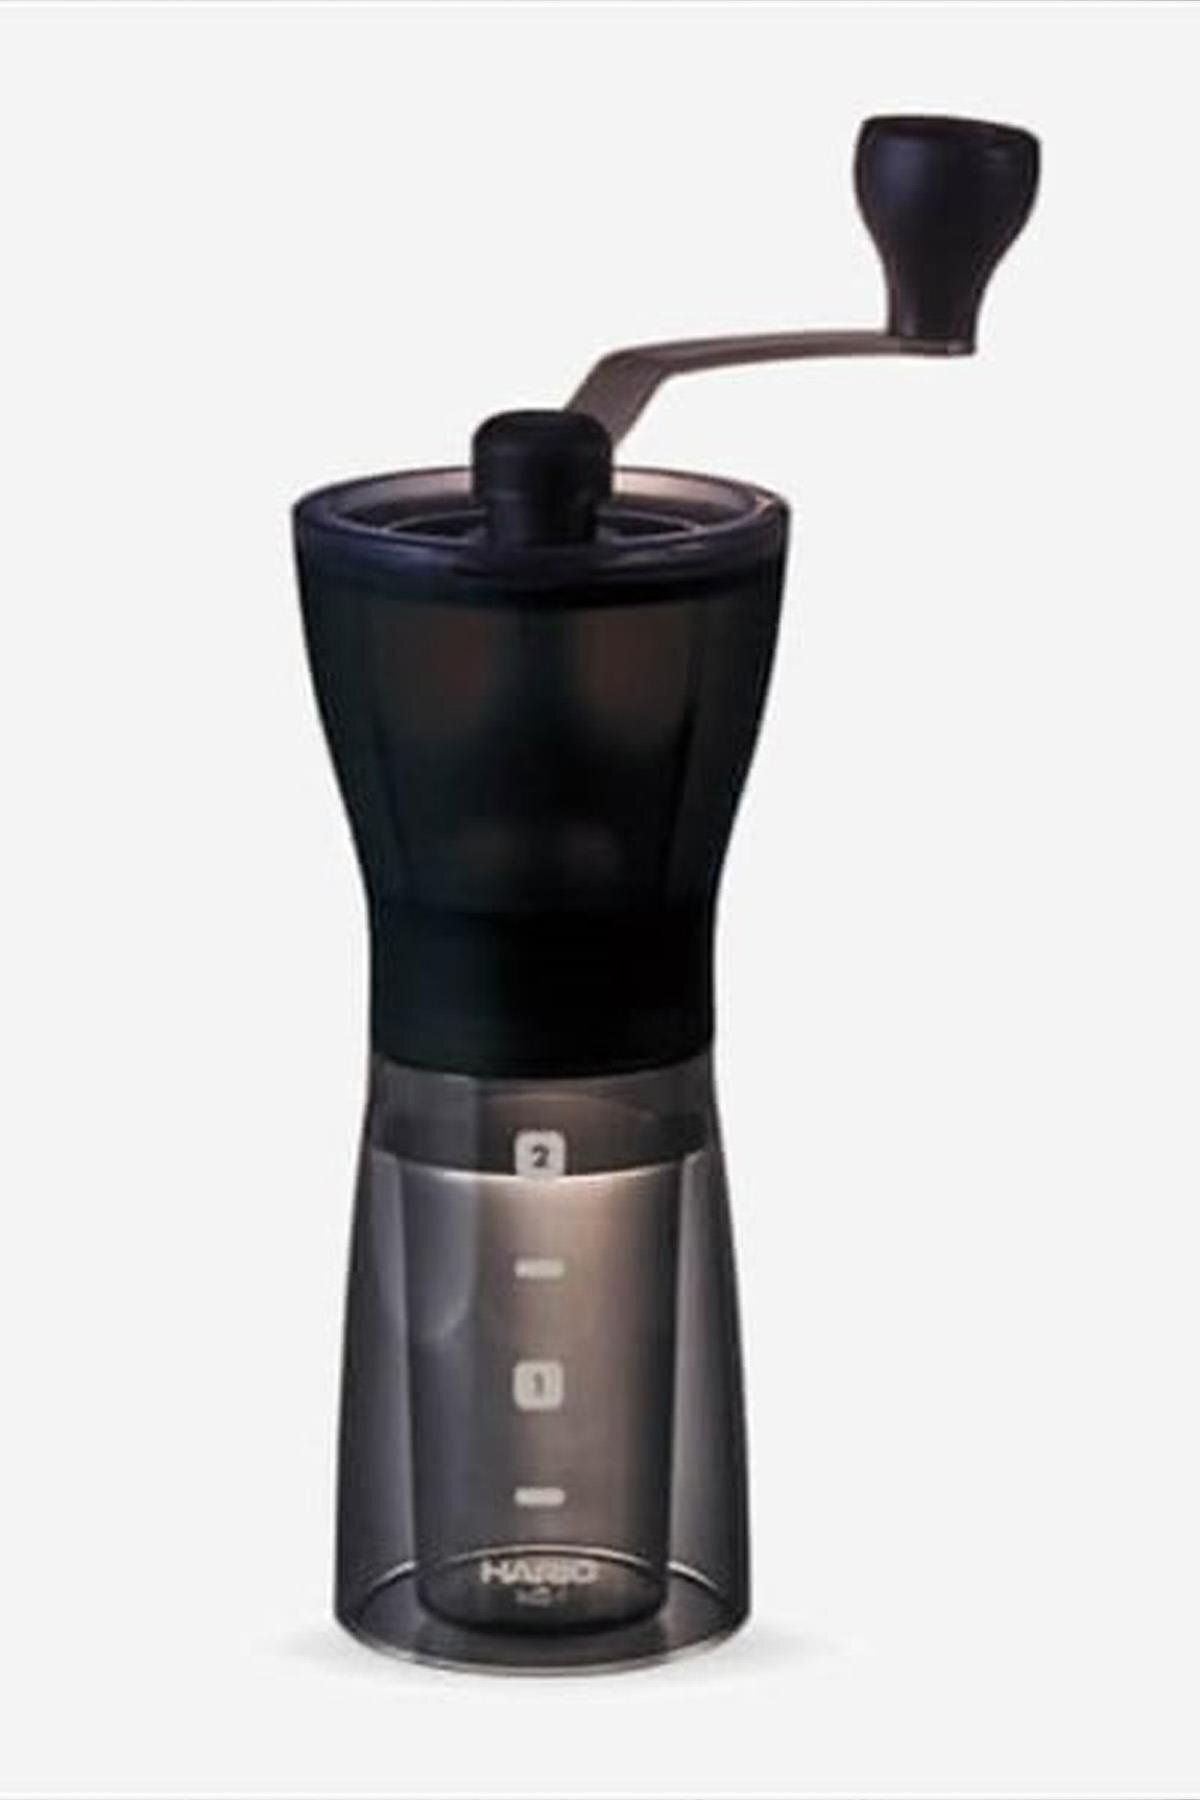 Hario - Mini Mill Plus Seramik Kahve Değirmeni | Öğütücüsü